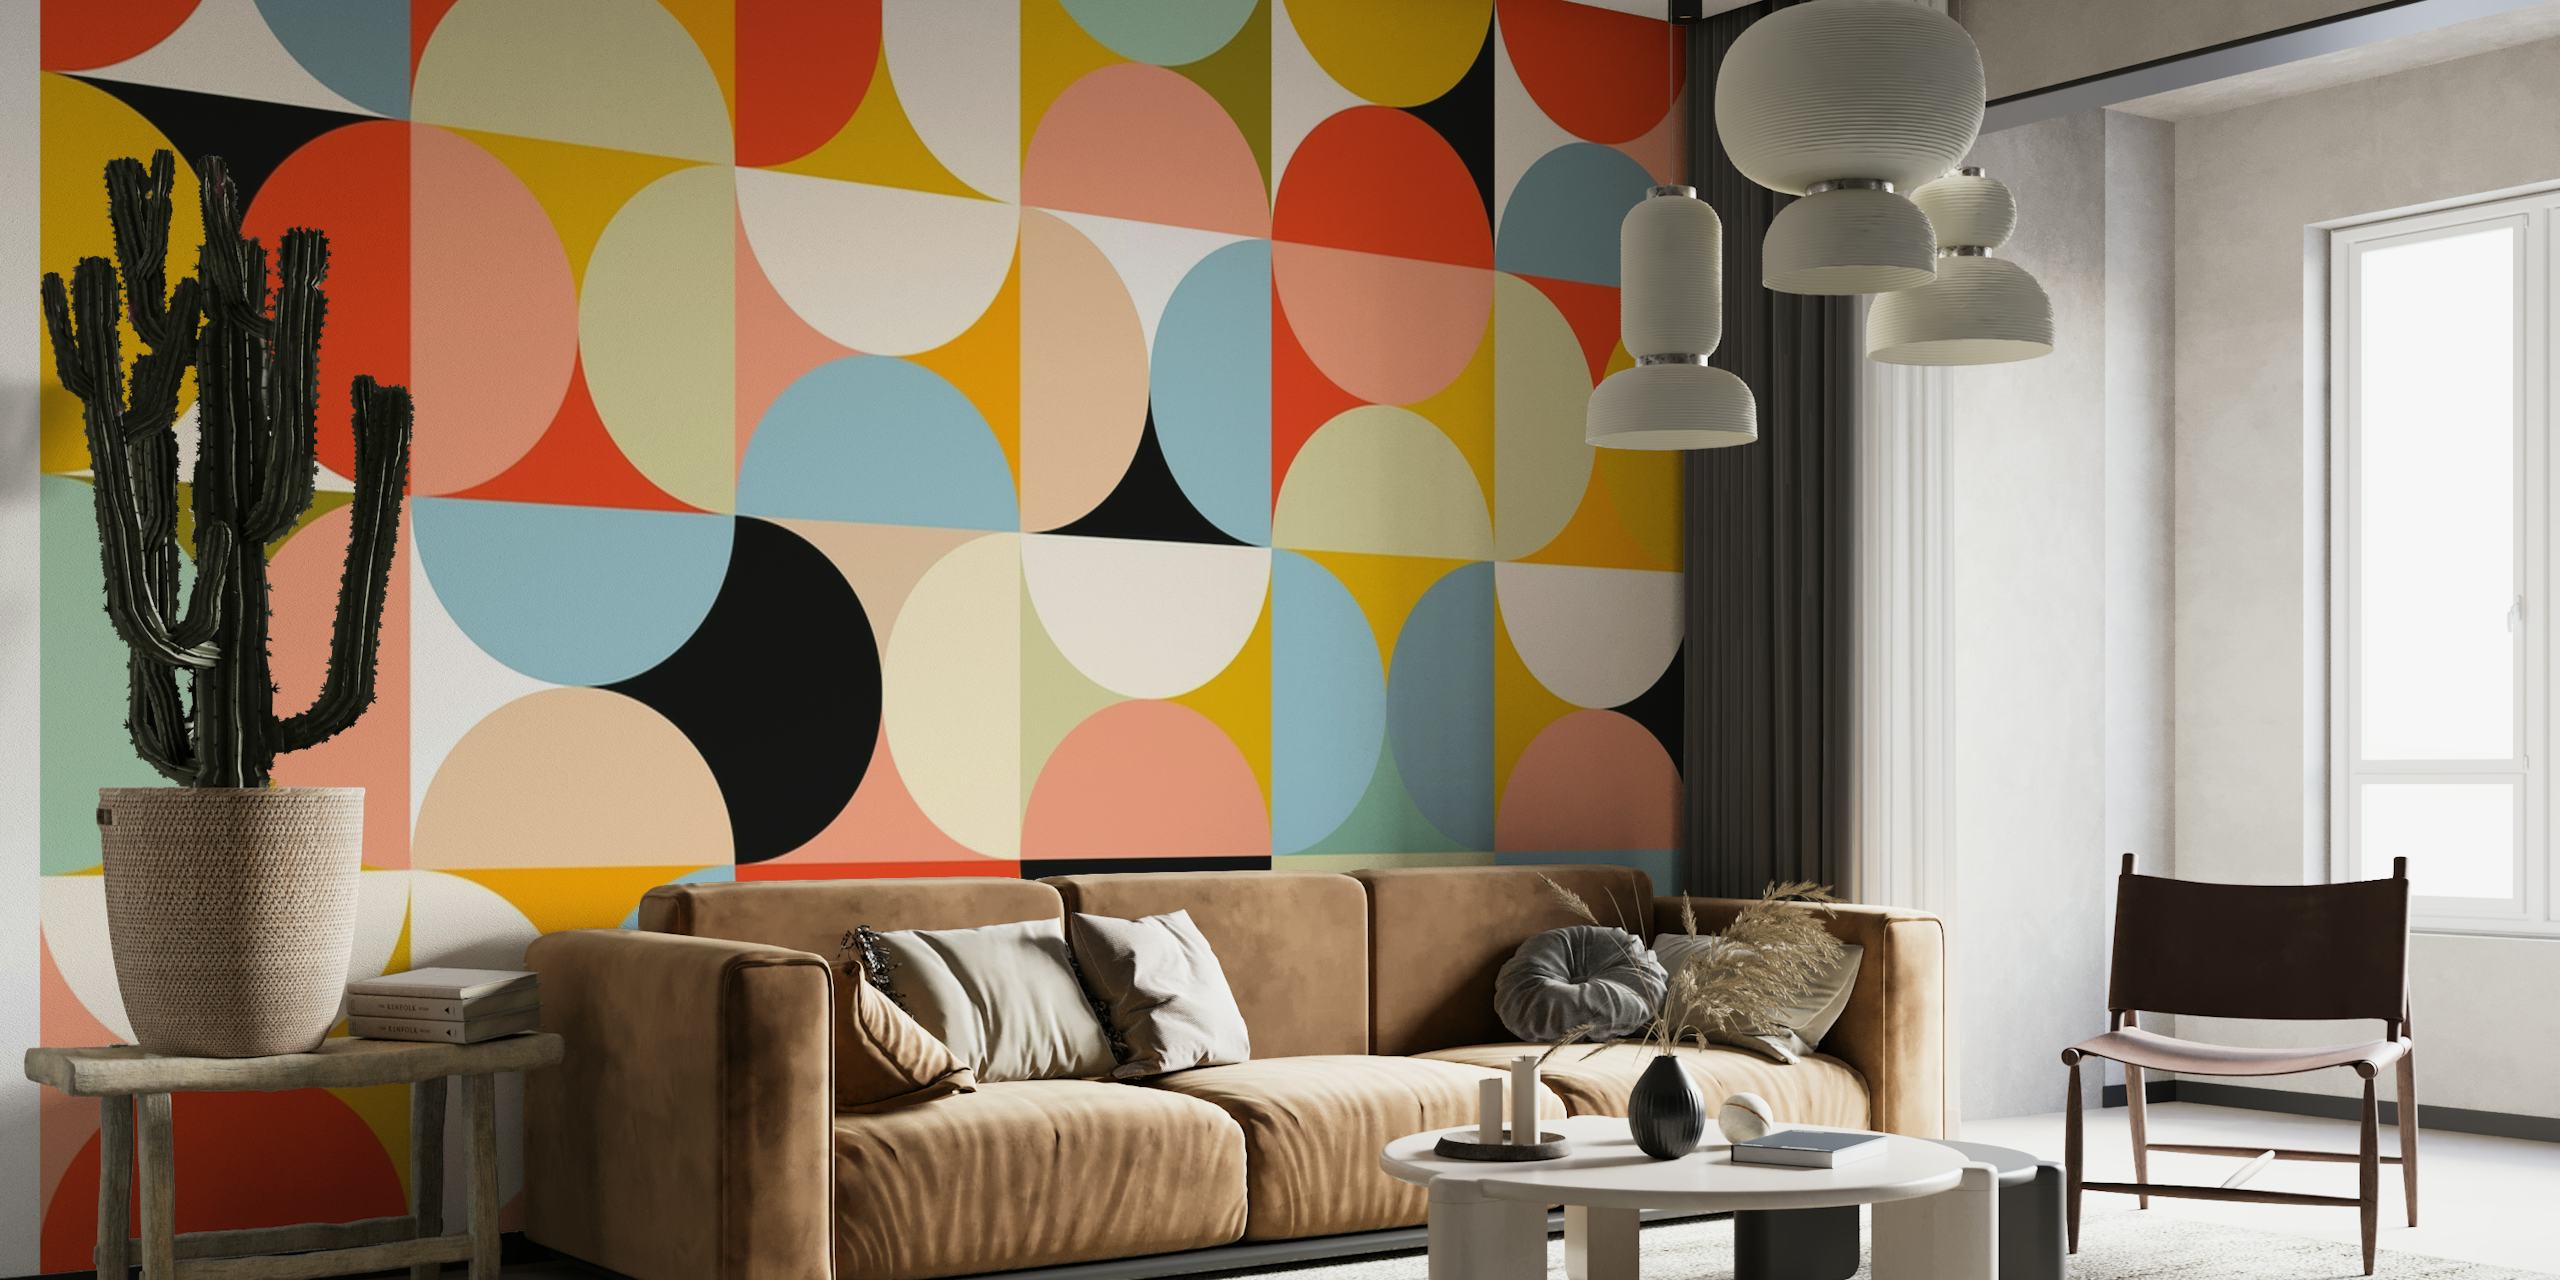 Midcentury modern geometric wallpaper in vibrant colours